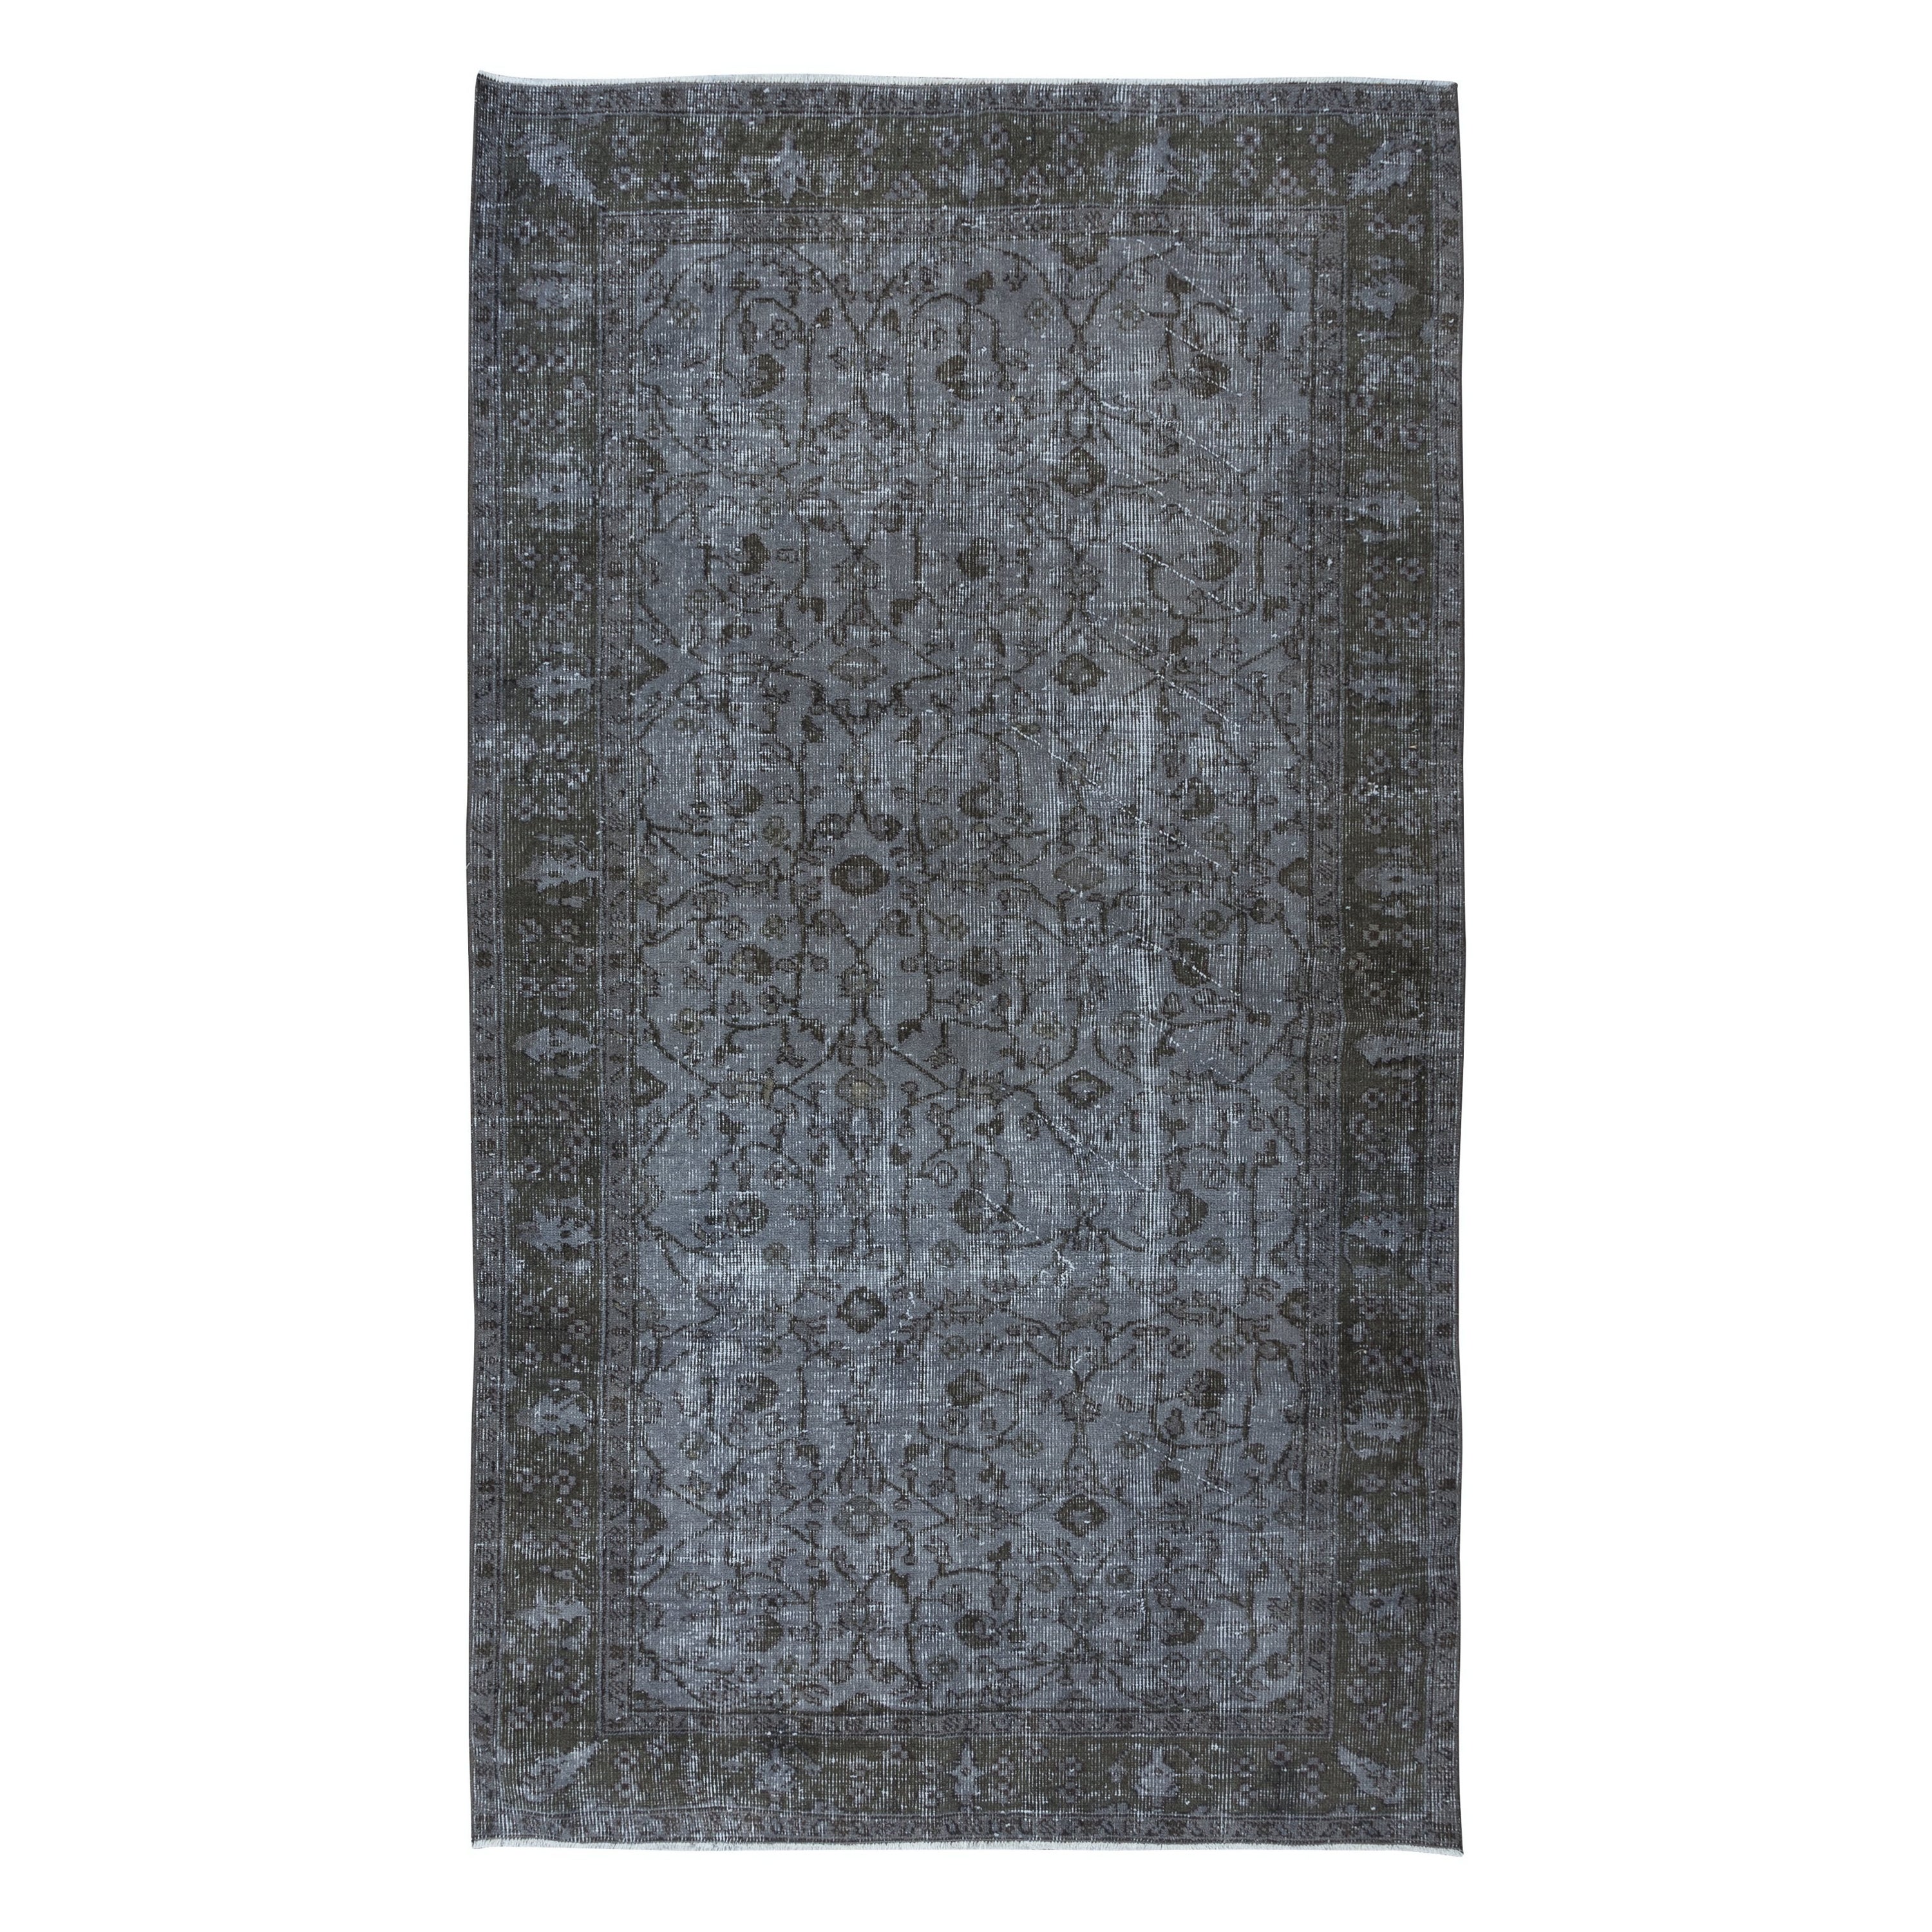 4.6x8 Ft Rustic Turkish Floral Rug. Grey Handmade Carpet for Modern Interiors